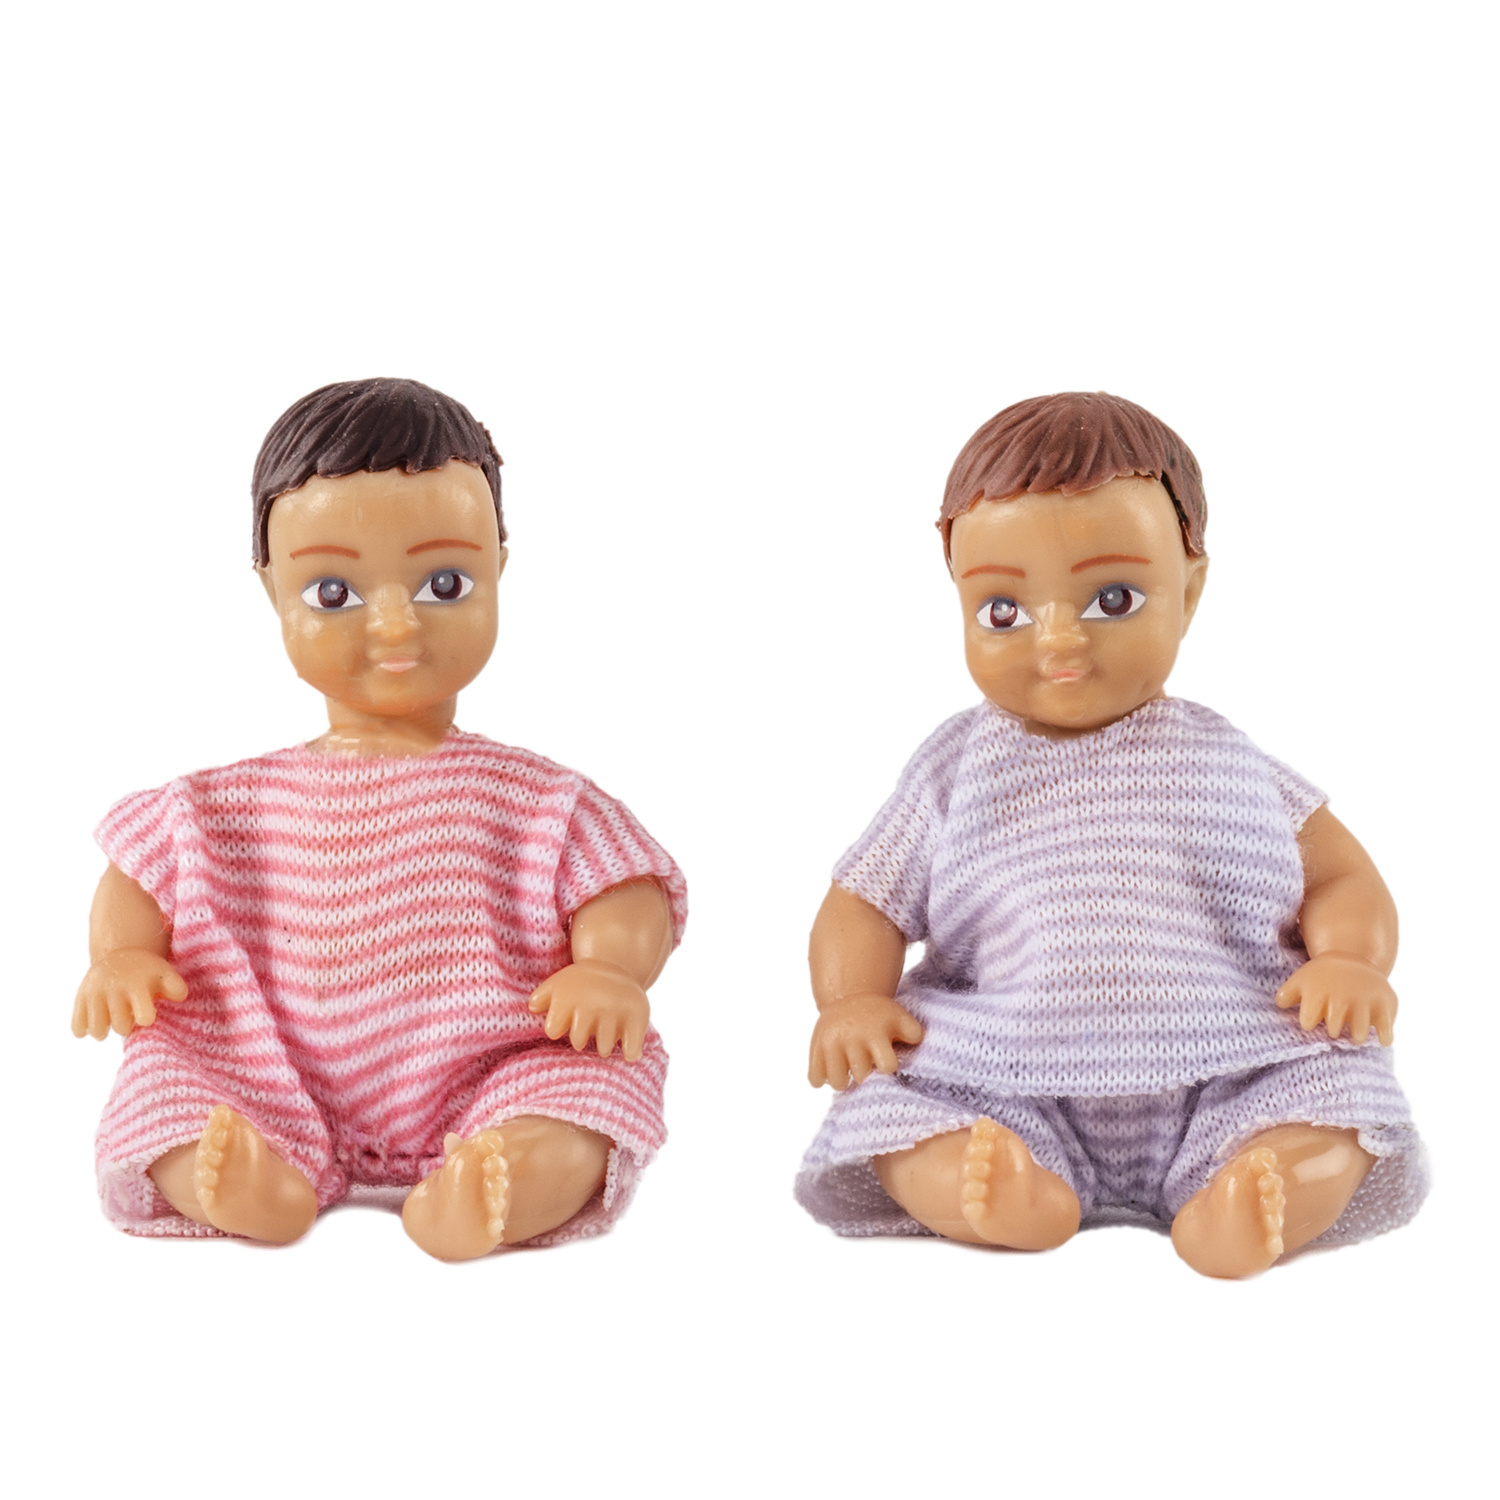 Lundby Baby's | Bestel Eenvoudig! - Project Dollhouse